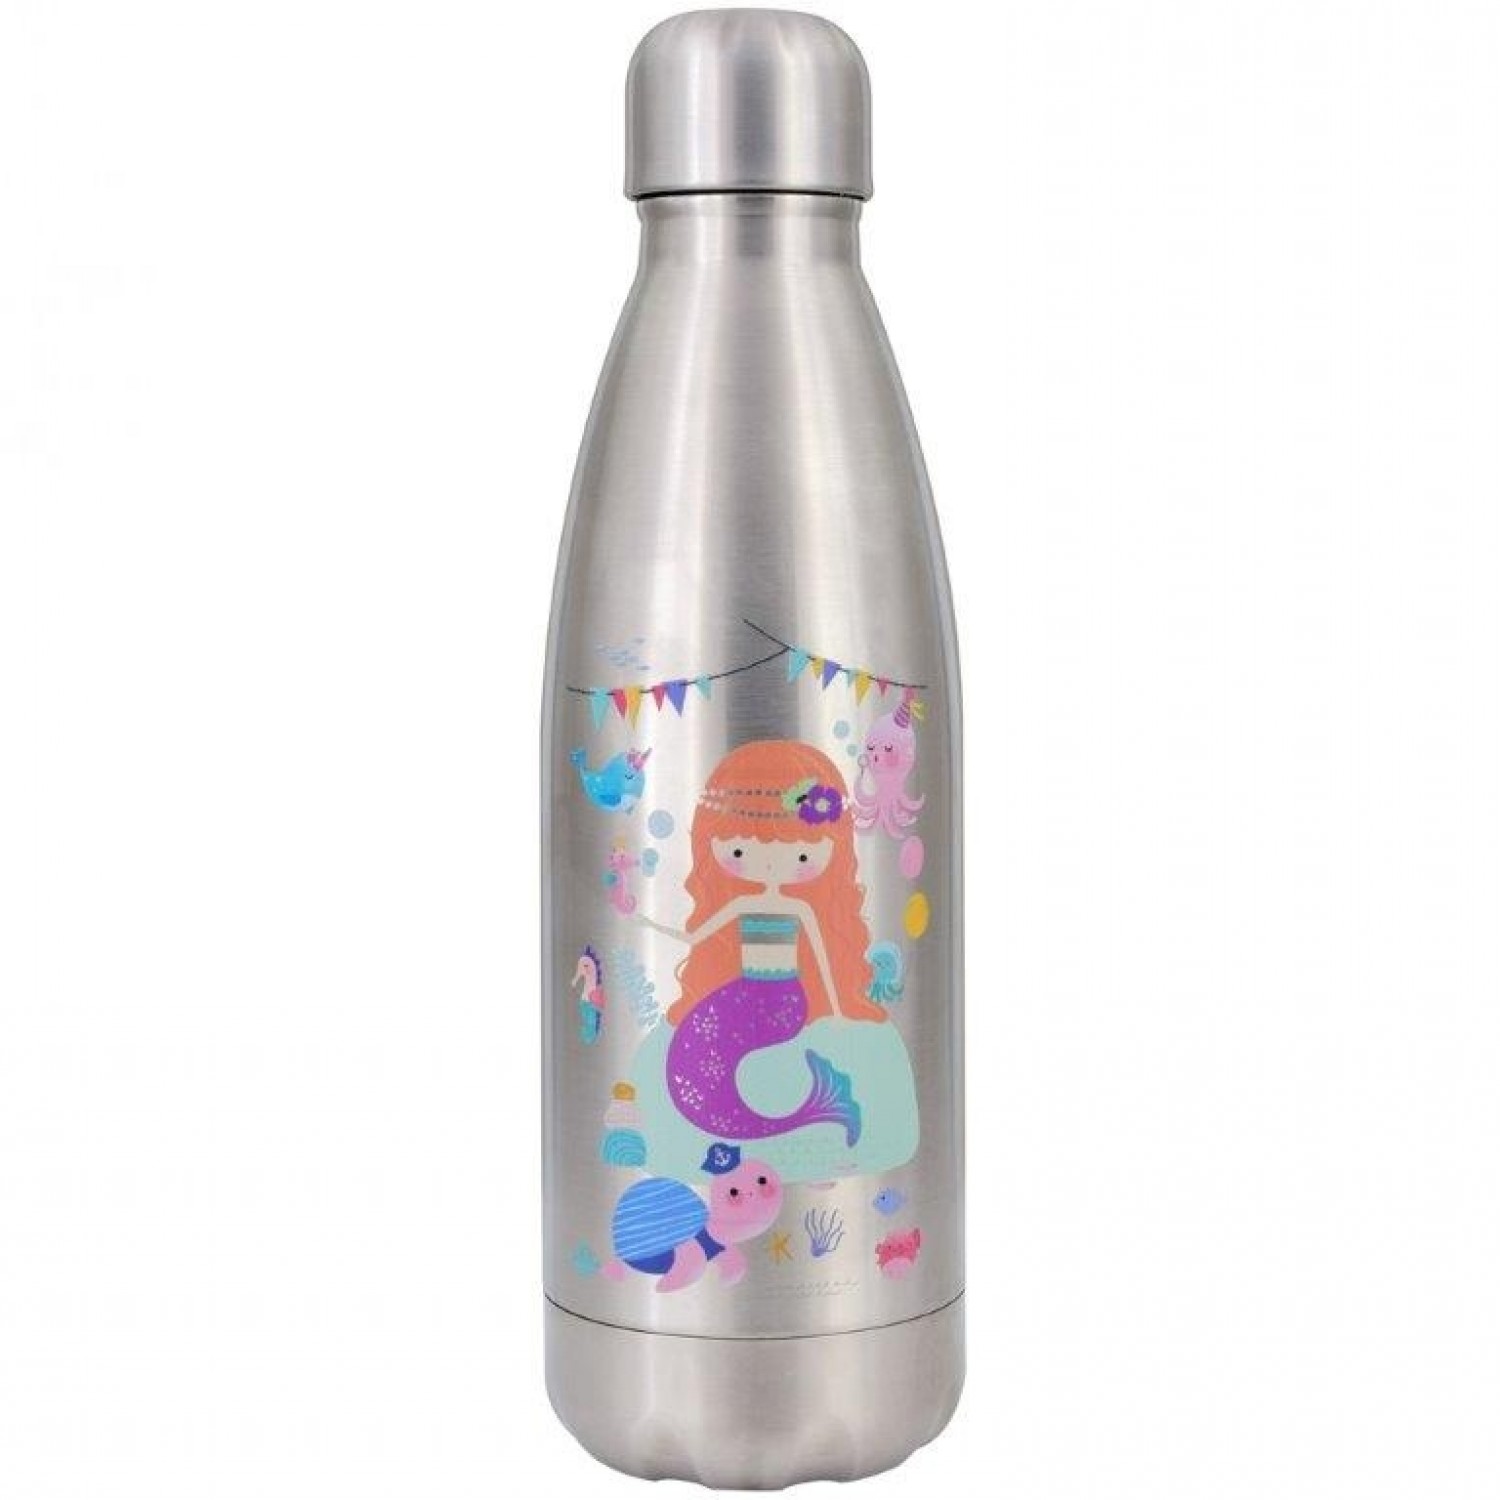 Dora’s KIDS Insulated Bottle, Stainless Steel - refill flask